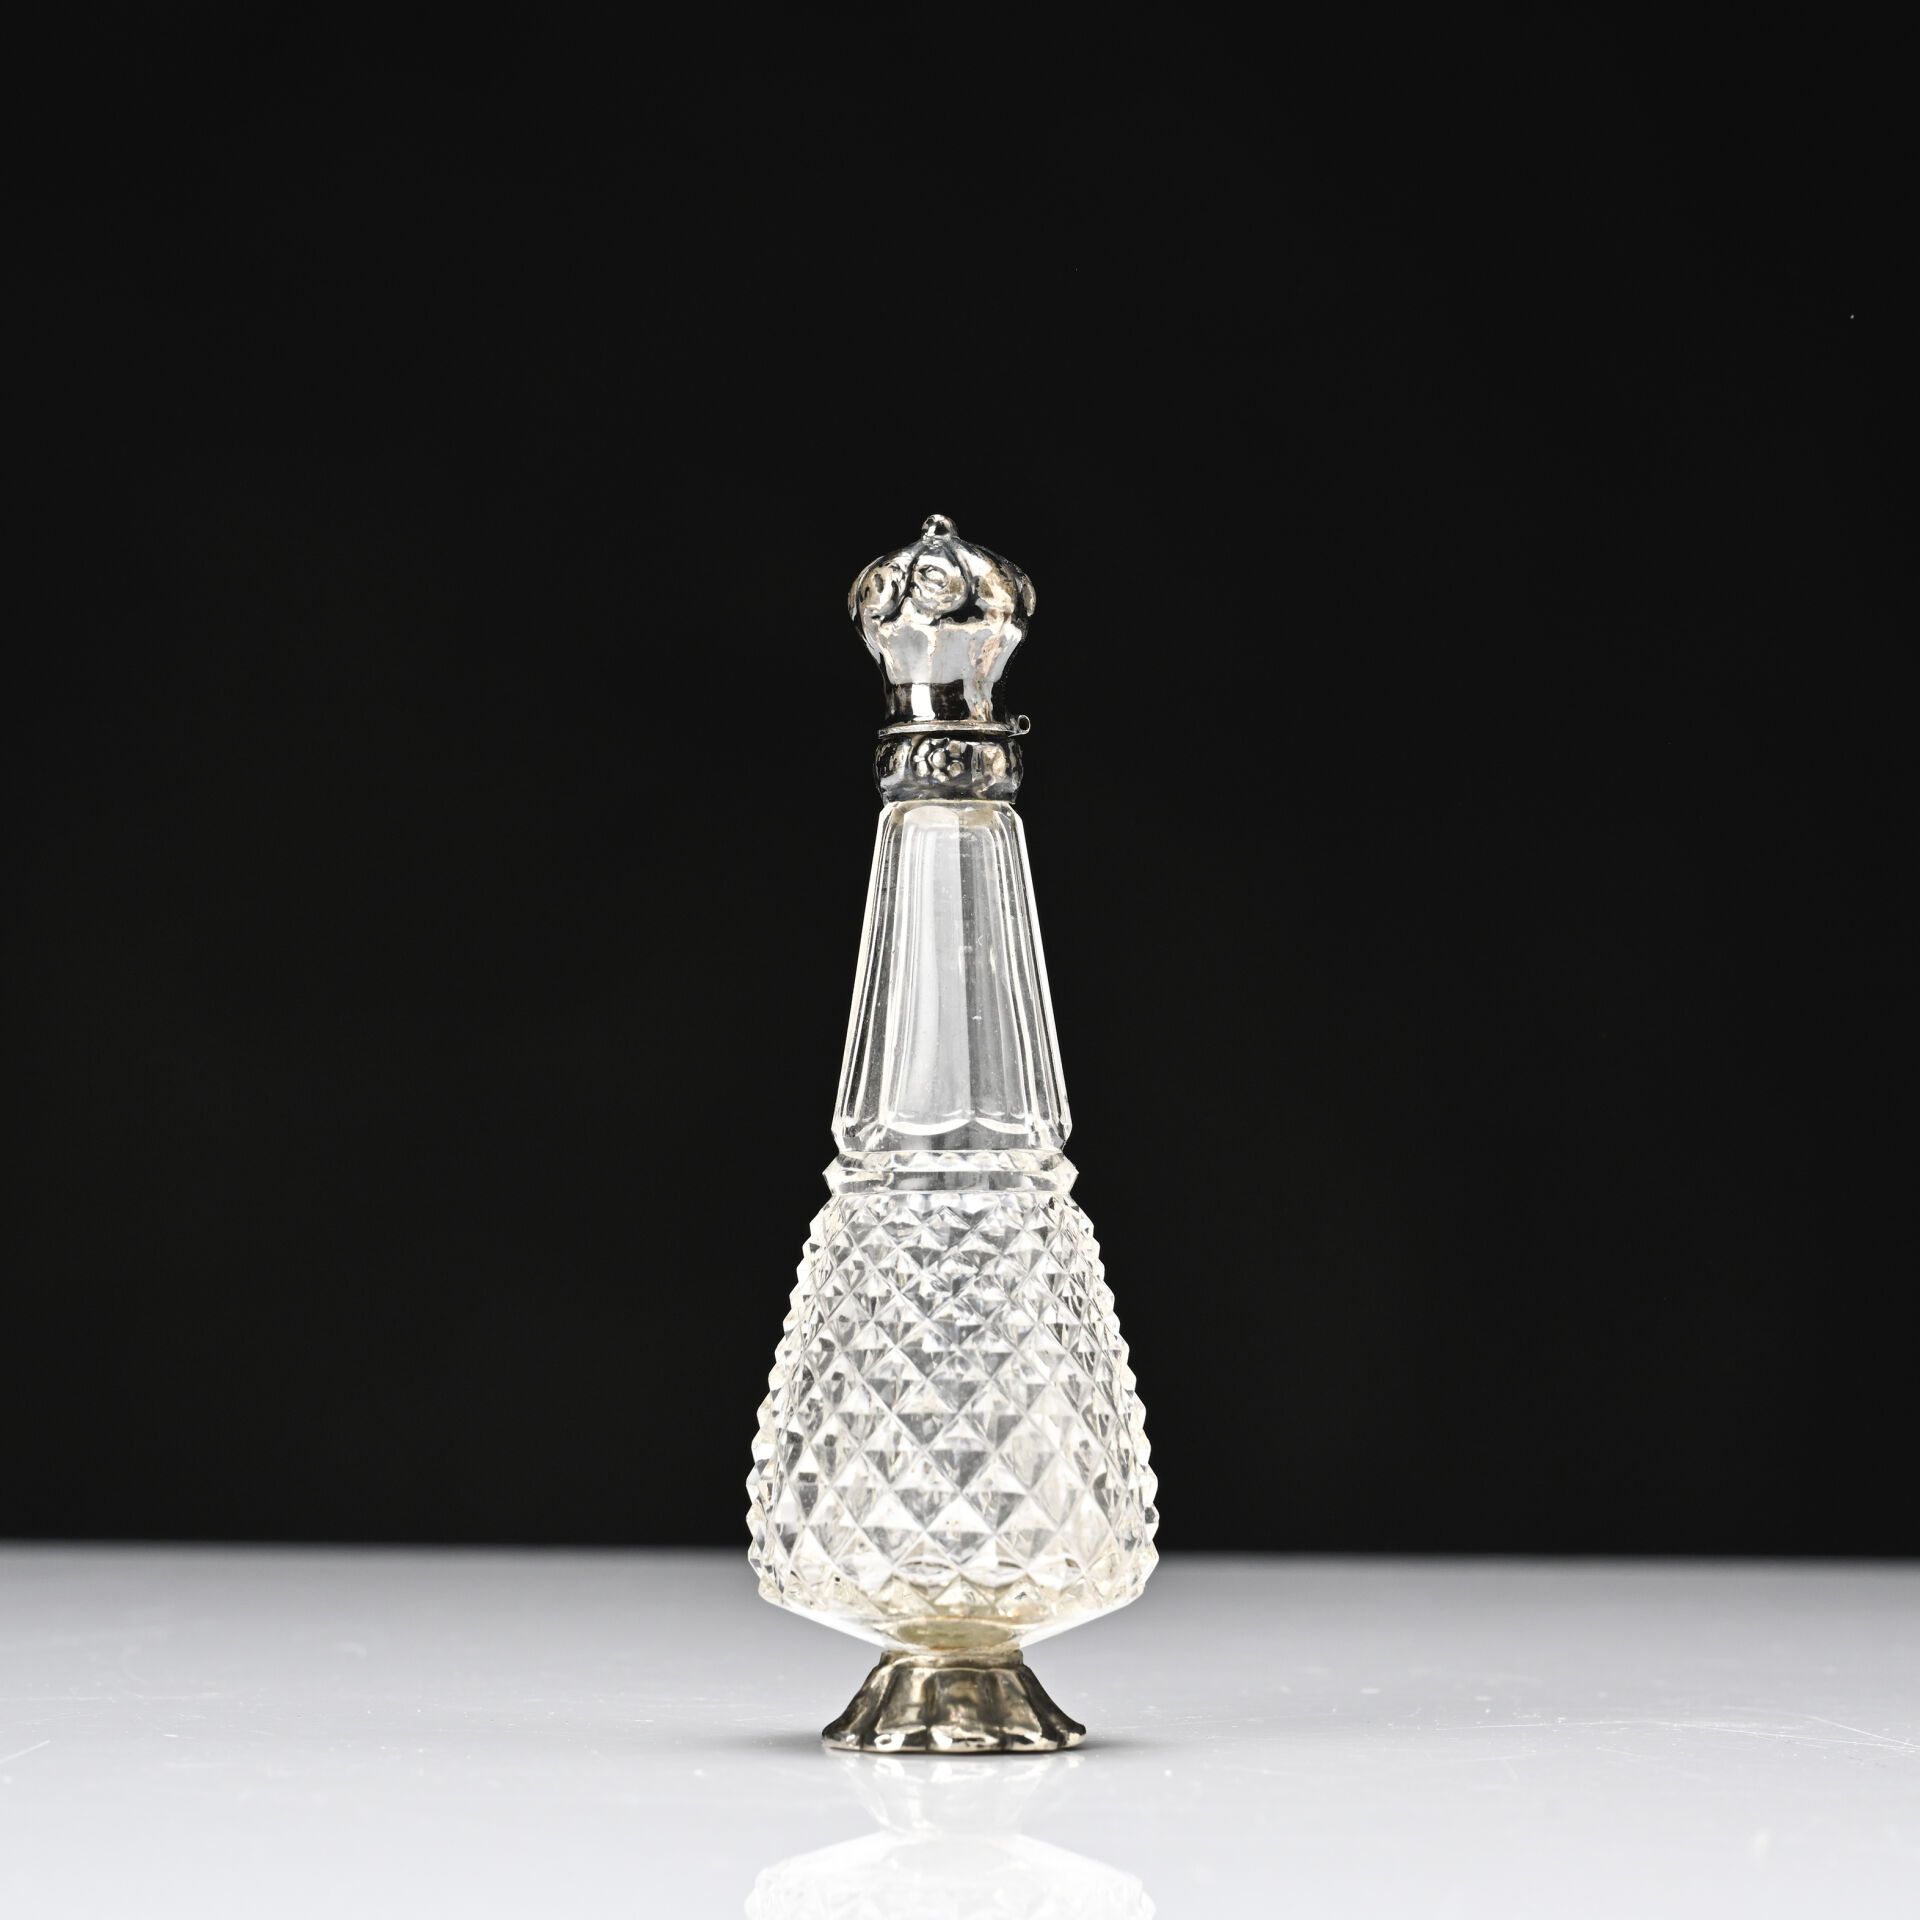 Null 切割水晶瓶，银质镶嵌，梨形底座，饰以钻石点 
拿破仑三世时期
高度：12 厘米